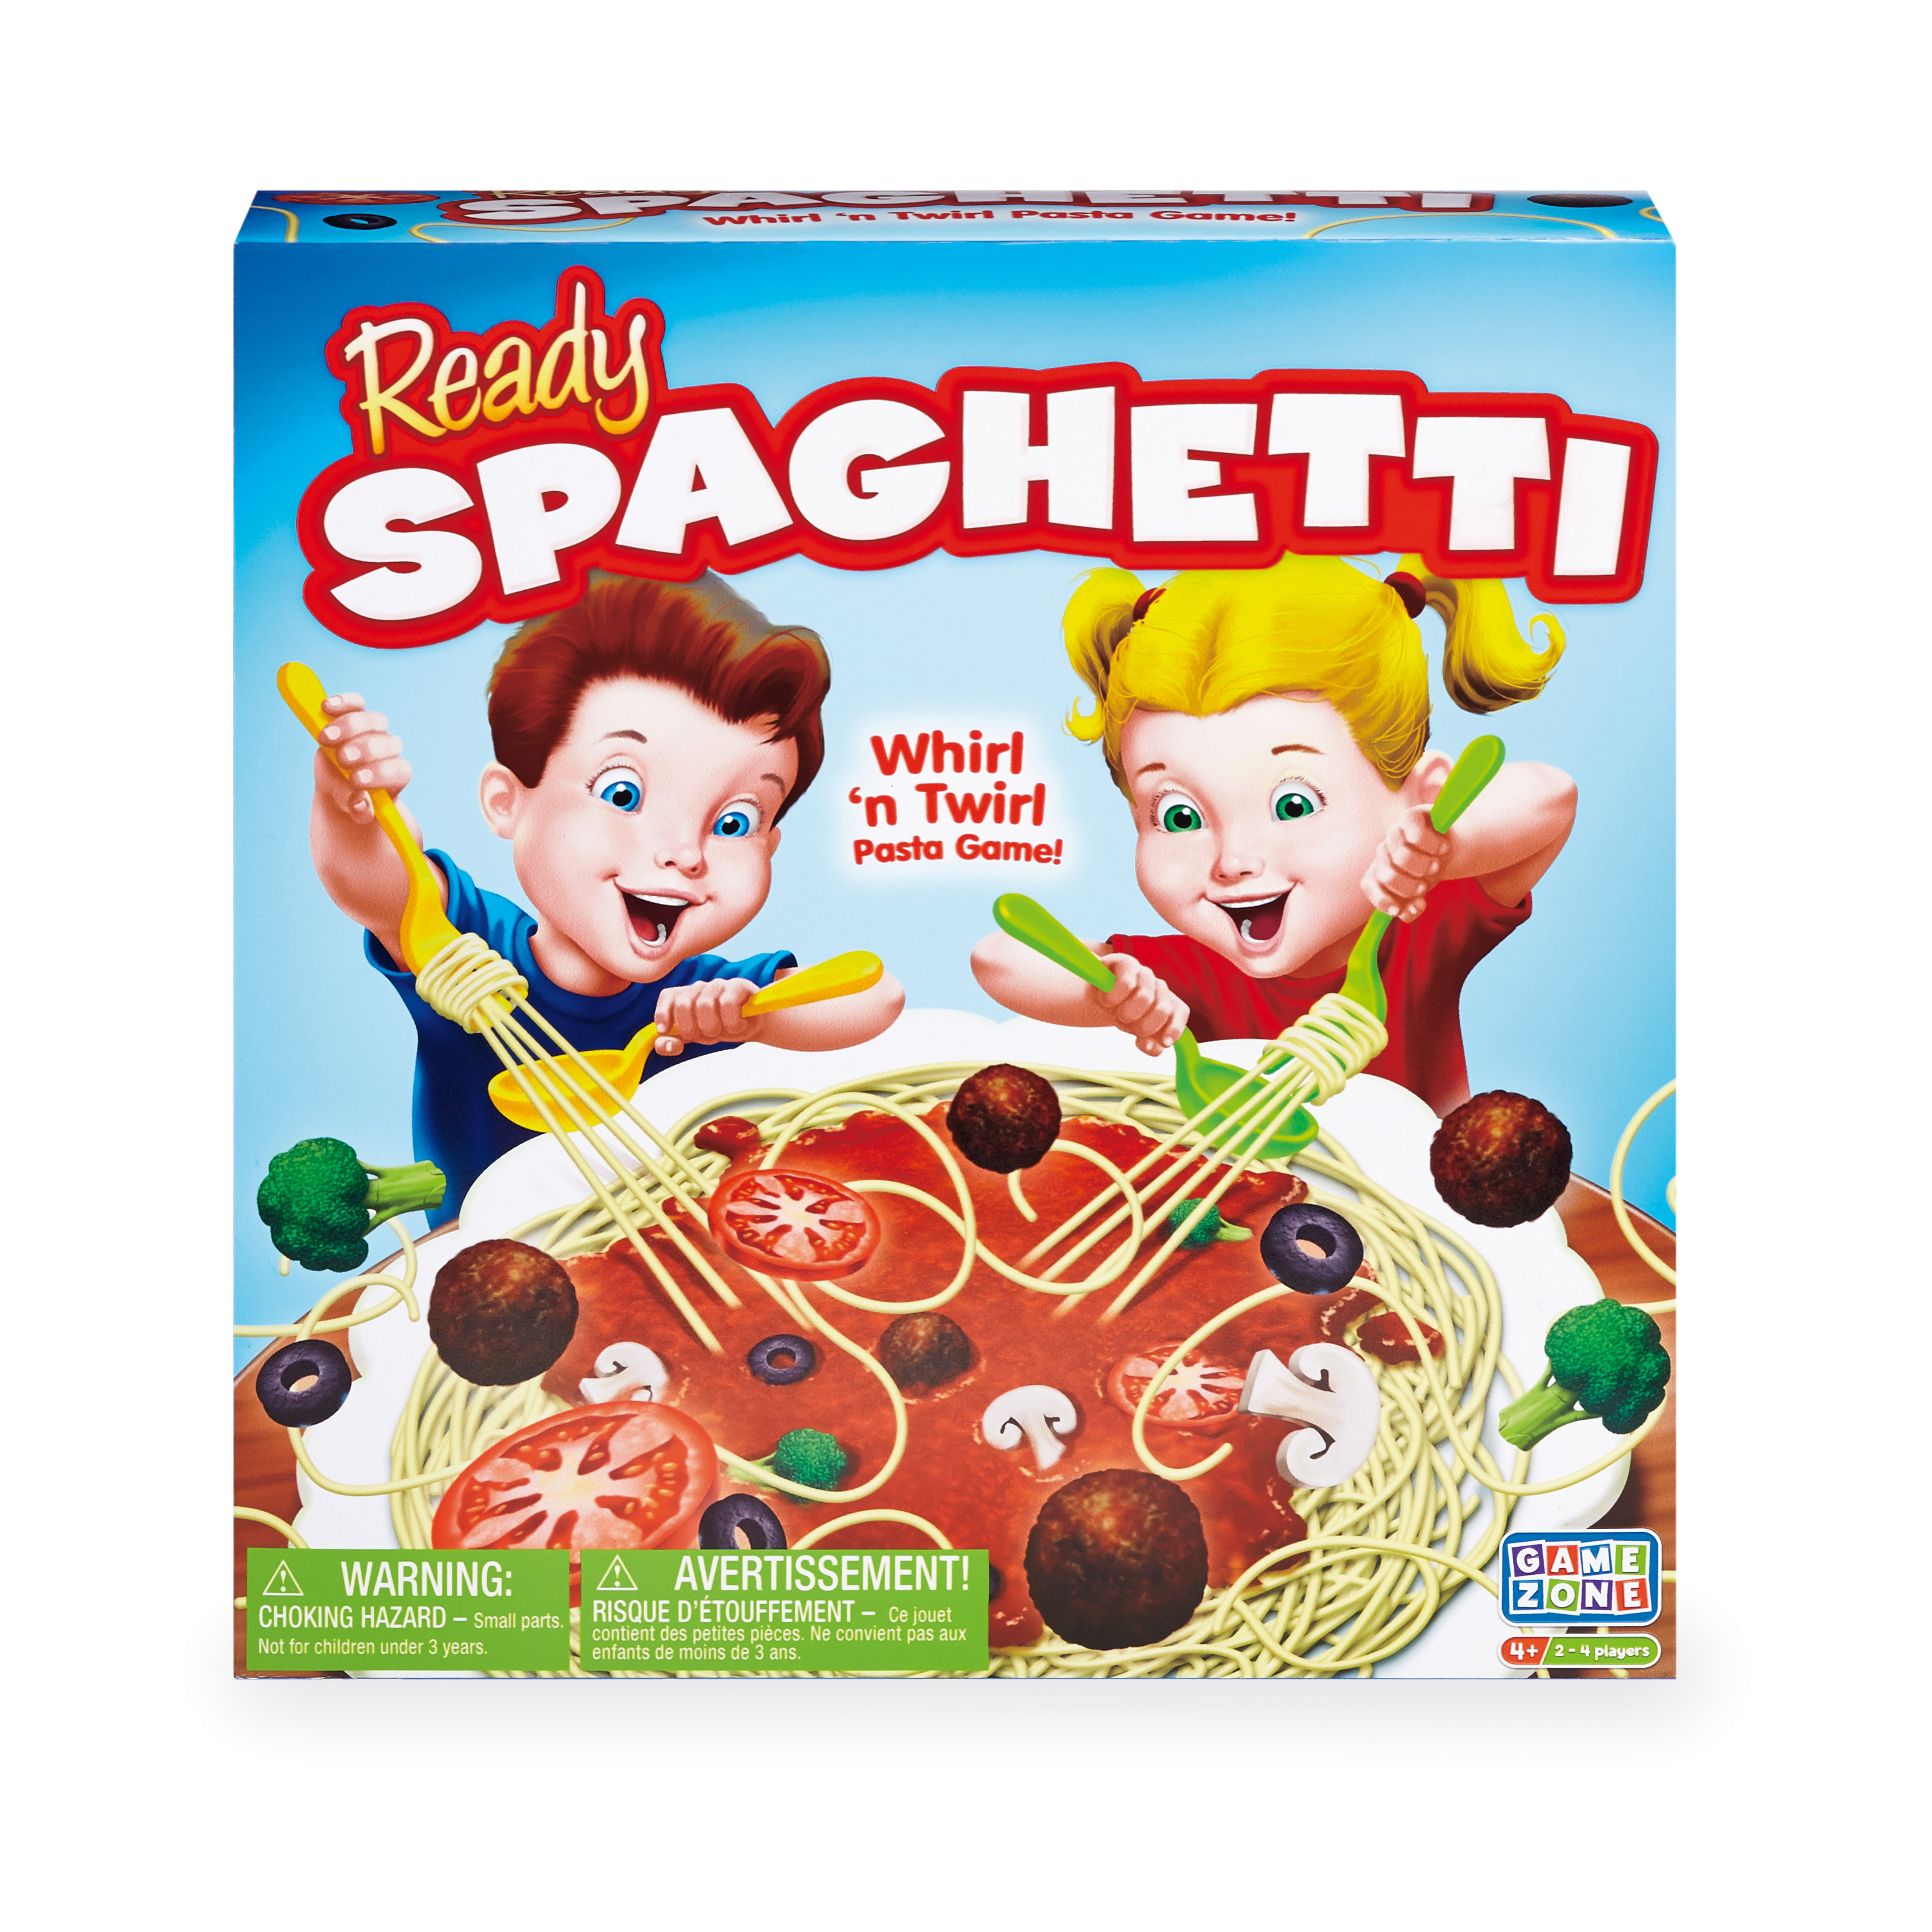 Игра спагетти играть. Игра ready Spaghetti. Ready Spaghetti настольная игра. Настольная игра "спагетти". Настольная игра шустрые спагетти.